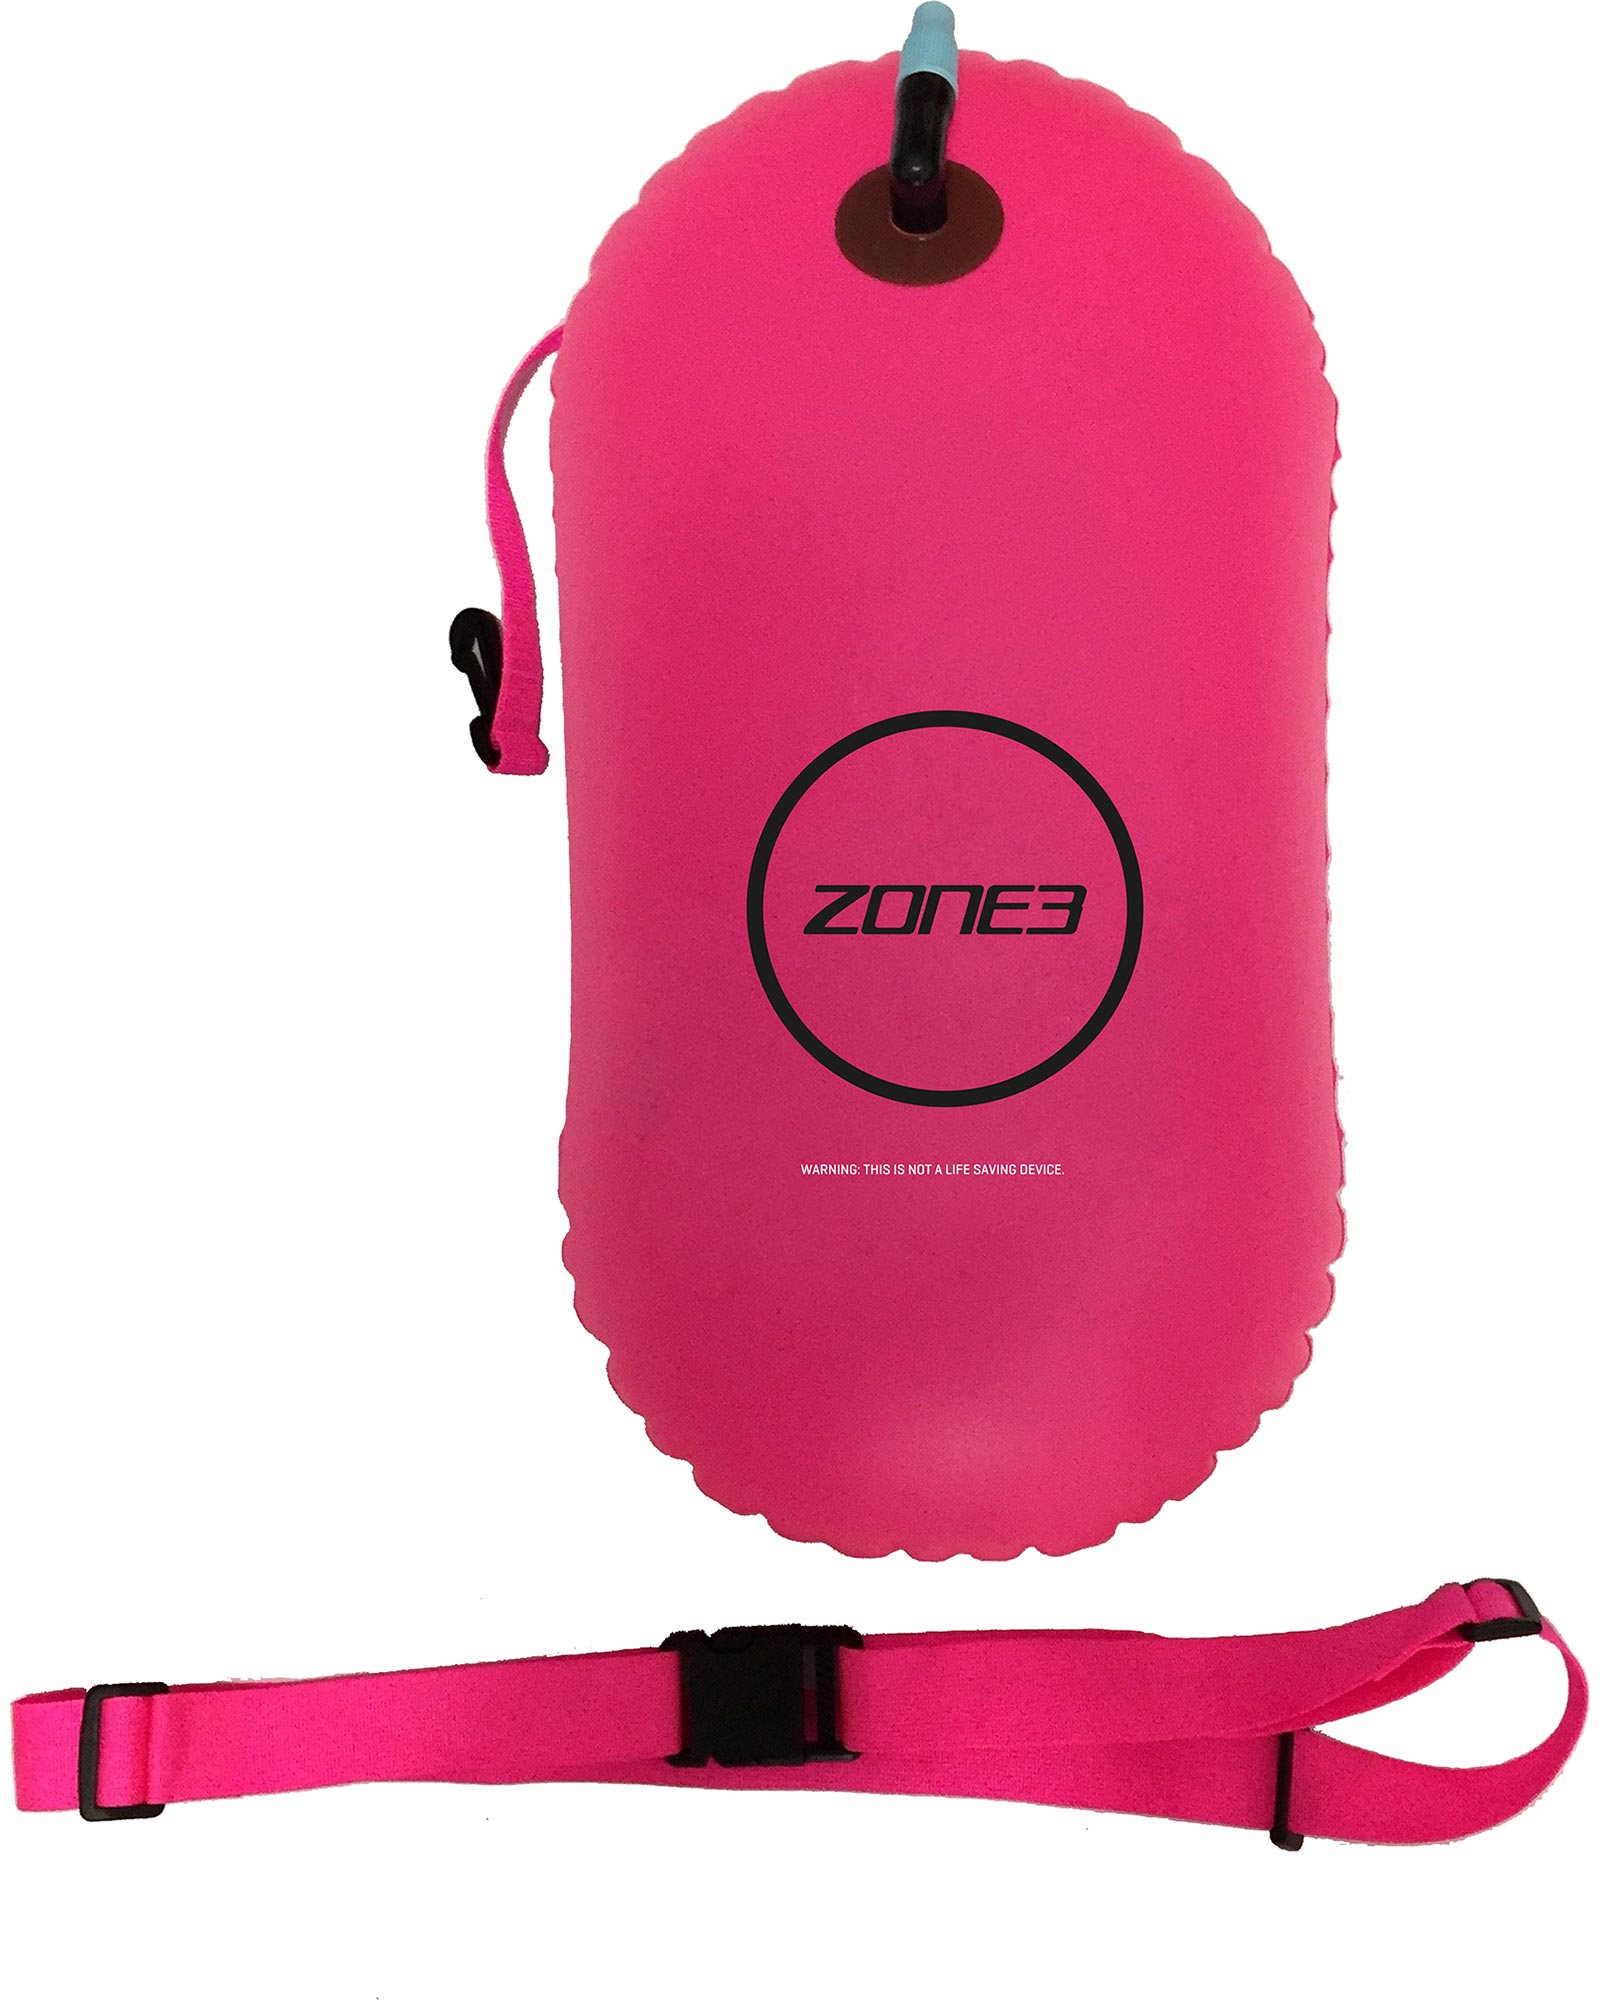 Zone3 Swim Safety Buoy/Tow Float - Neon Pink